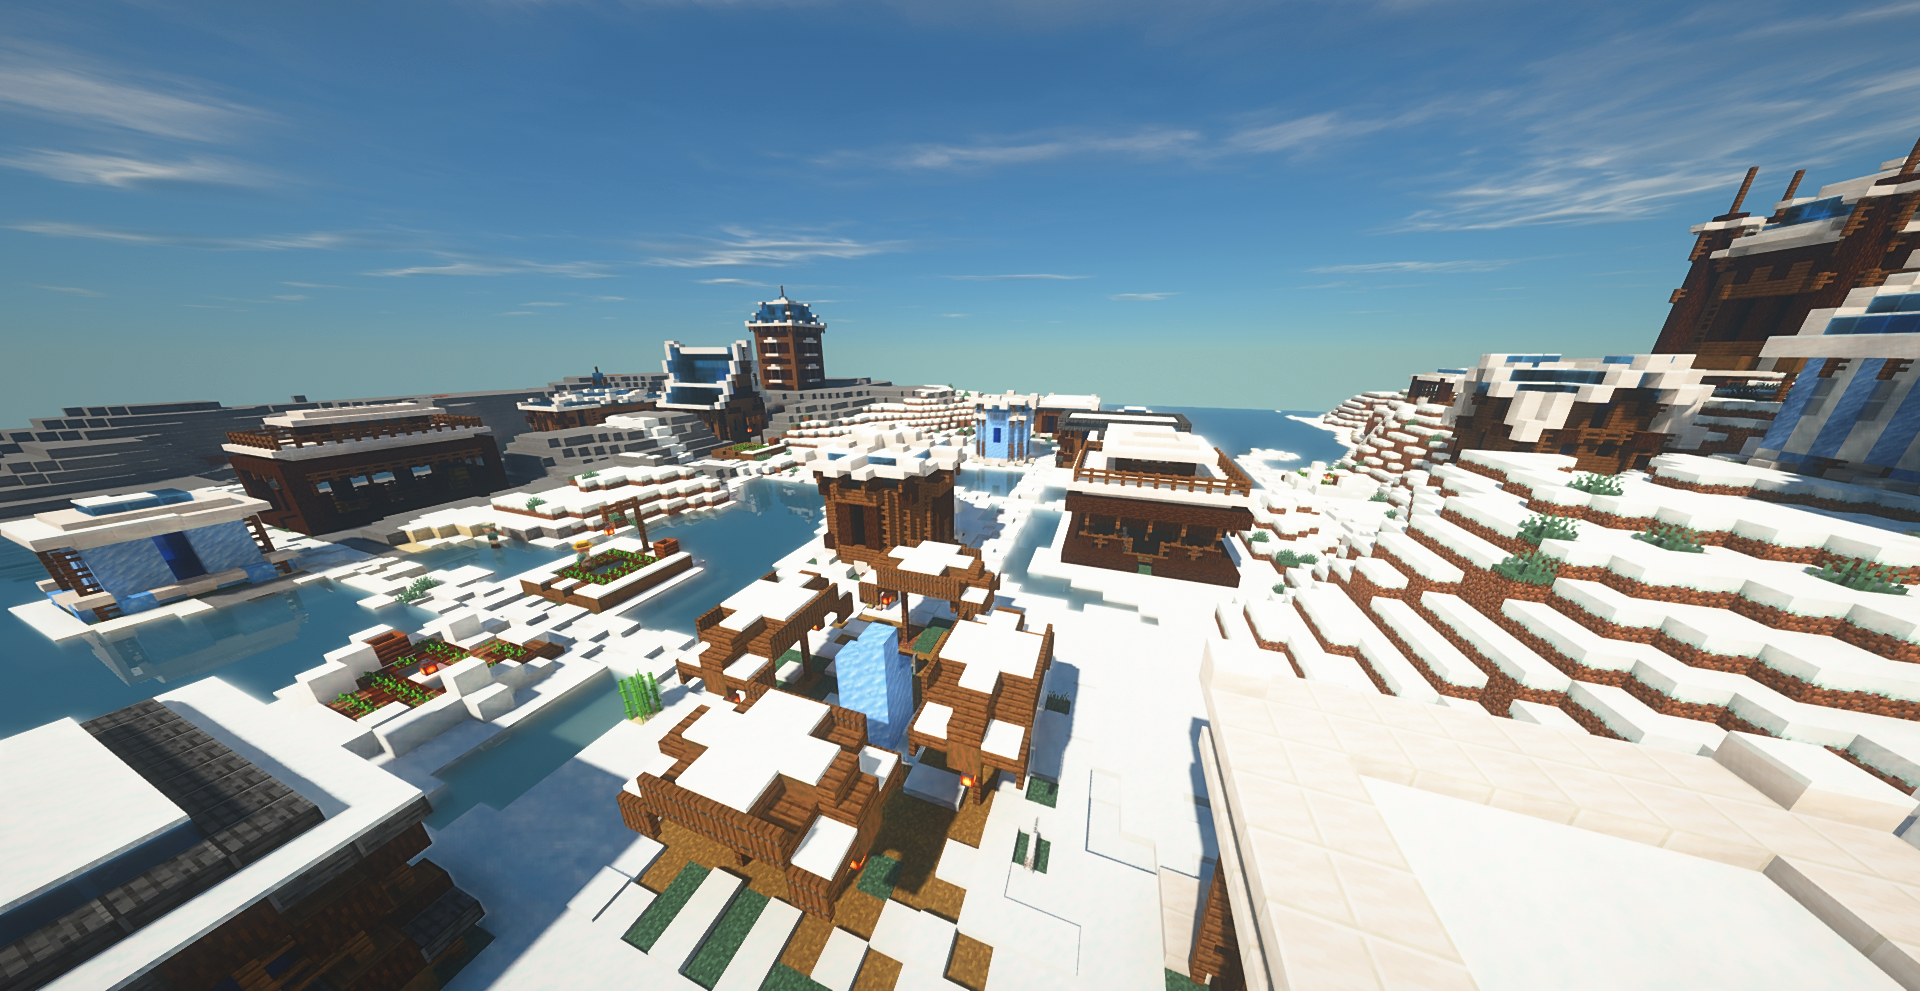 Snowy Village Full View